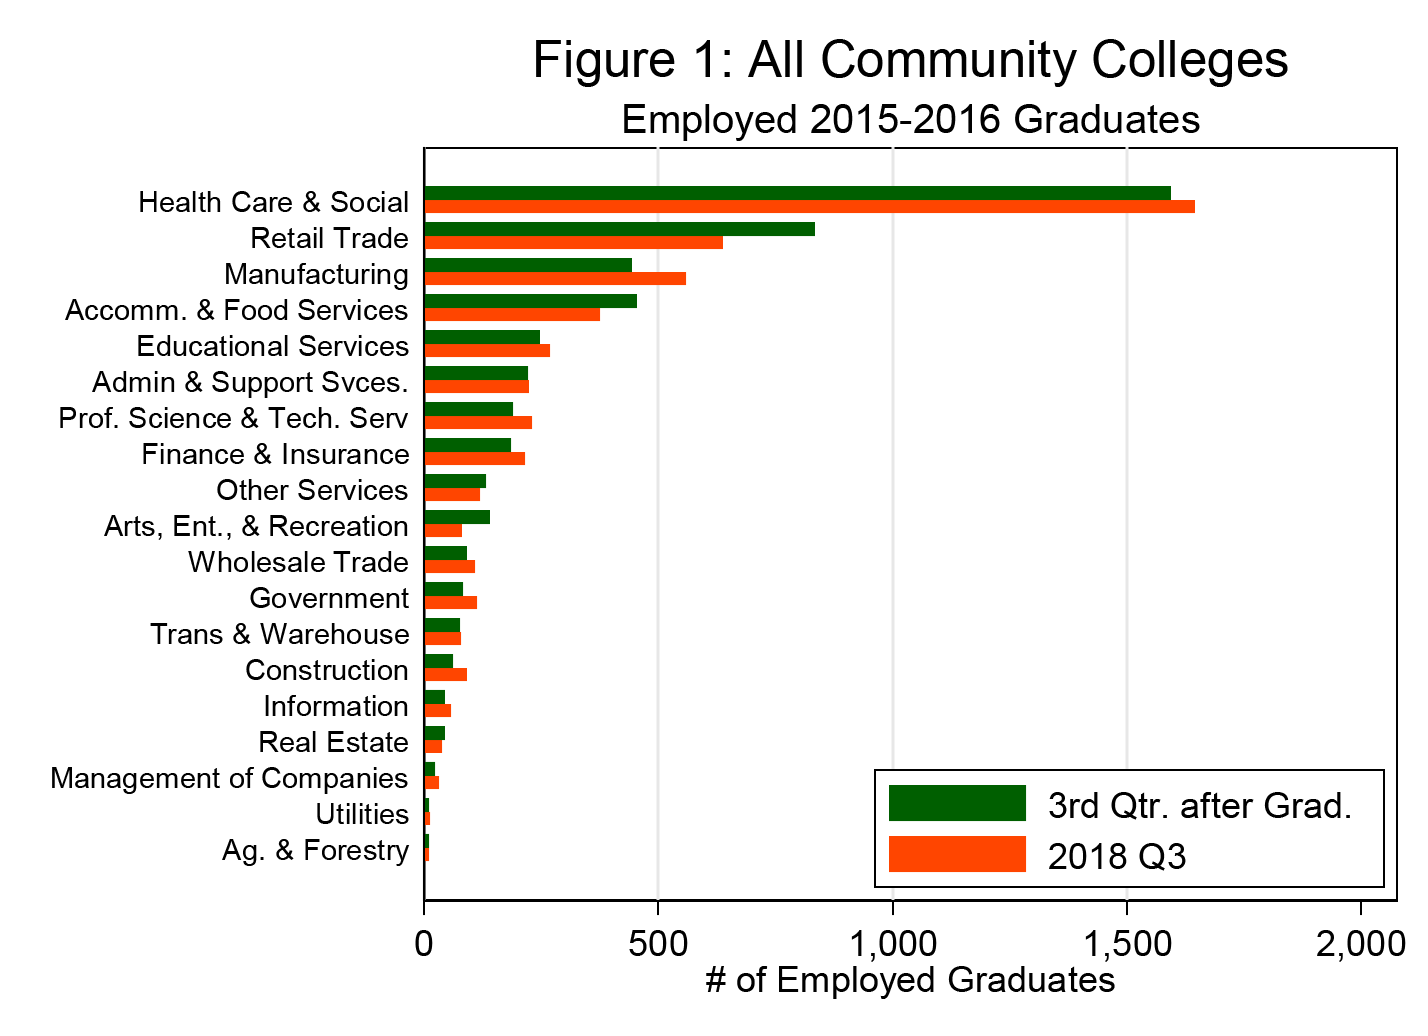 Figure 1: All Community Colleges Employed 2015-2016 Graduates